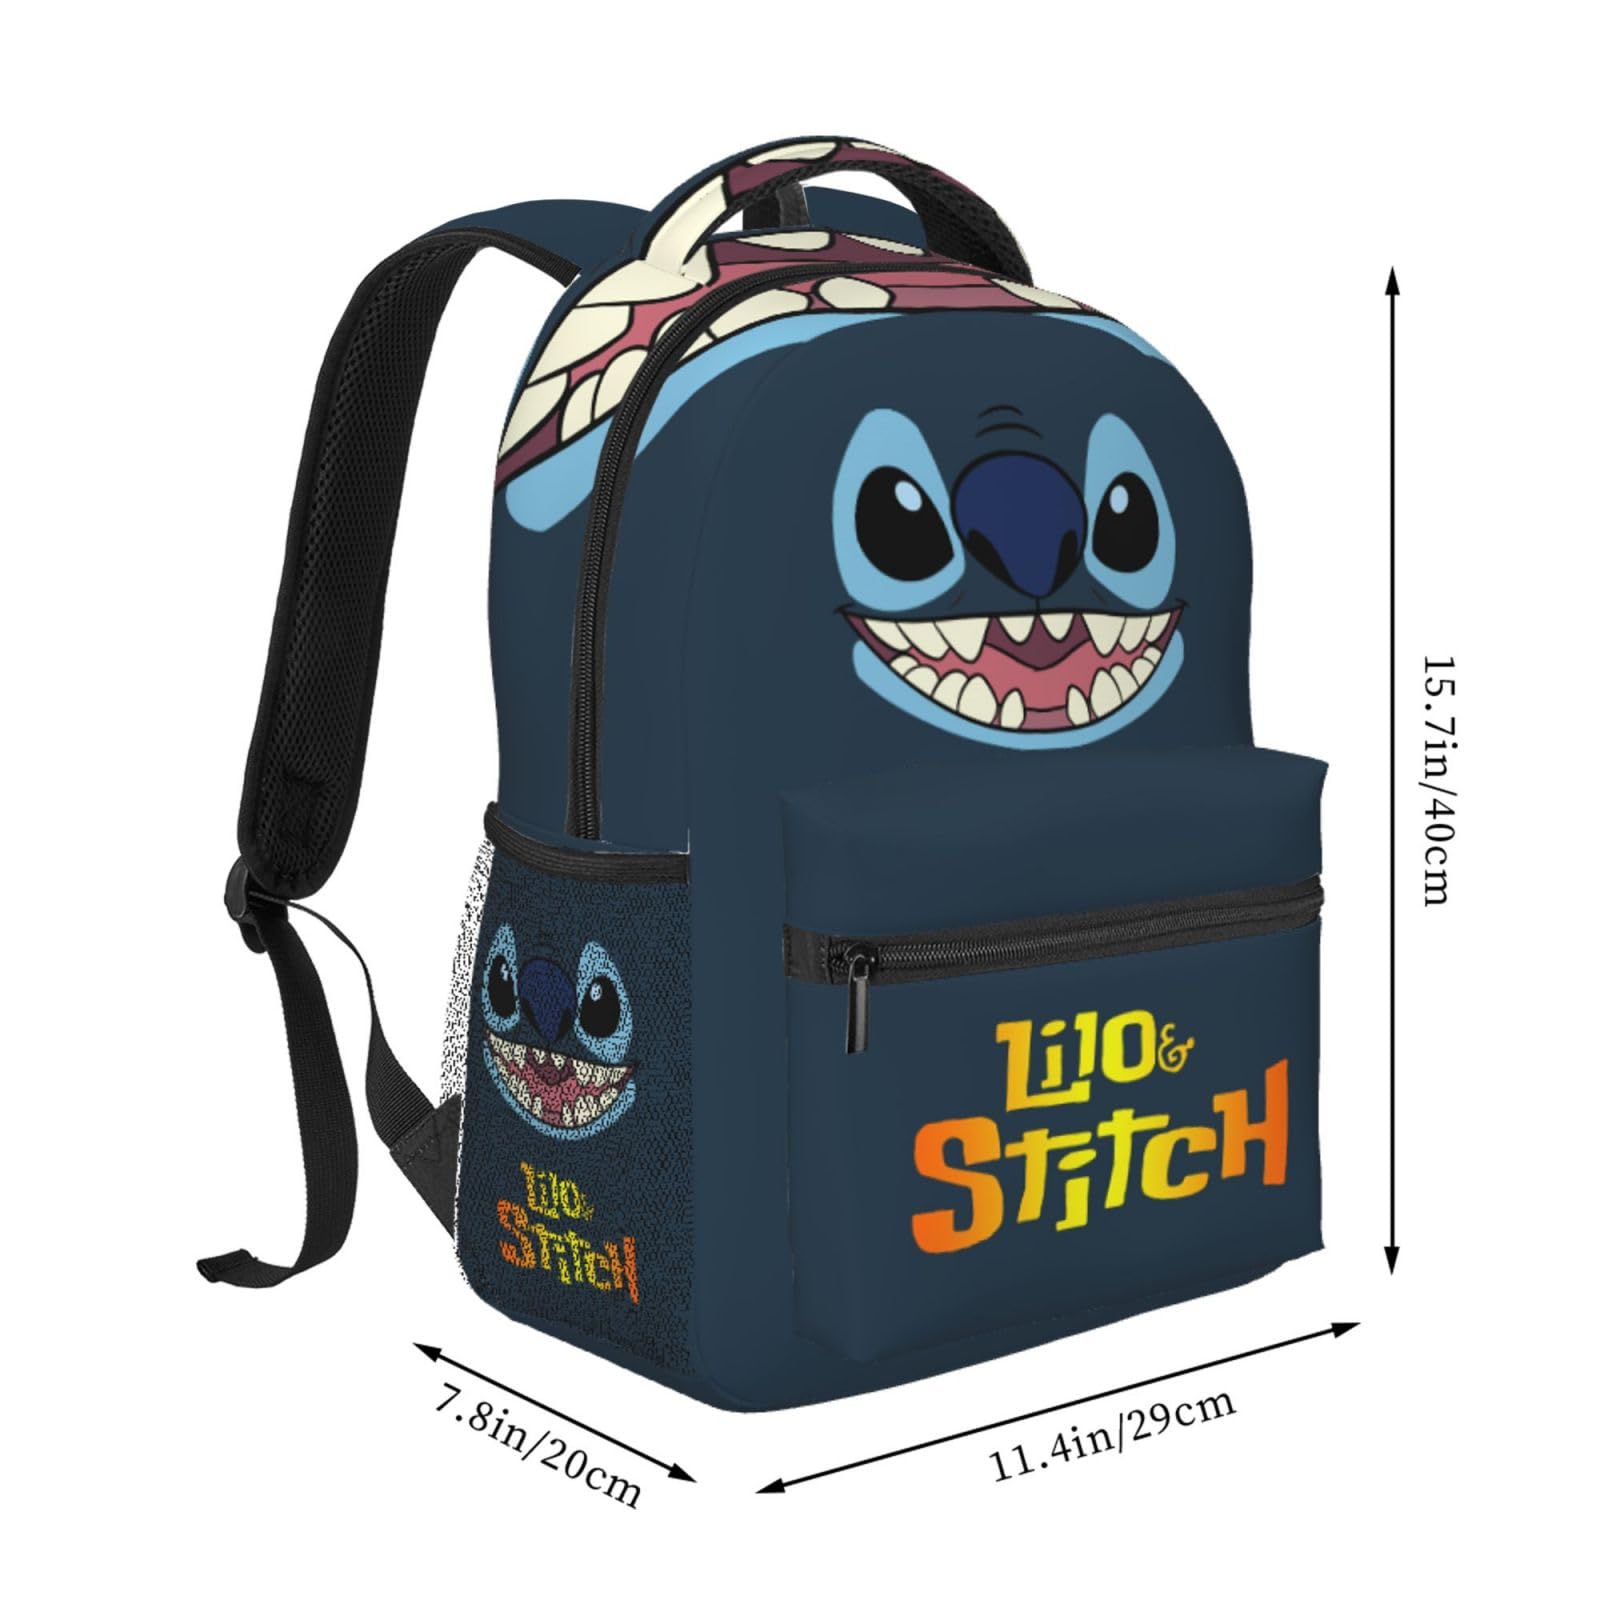 NBTZ ZX Cute Cartoon Backpack for Boys Girls,Kids School Bookbag Travel Lightweight Backpack Laptop Backpacks Casual Shoulders Bag